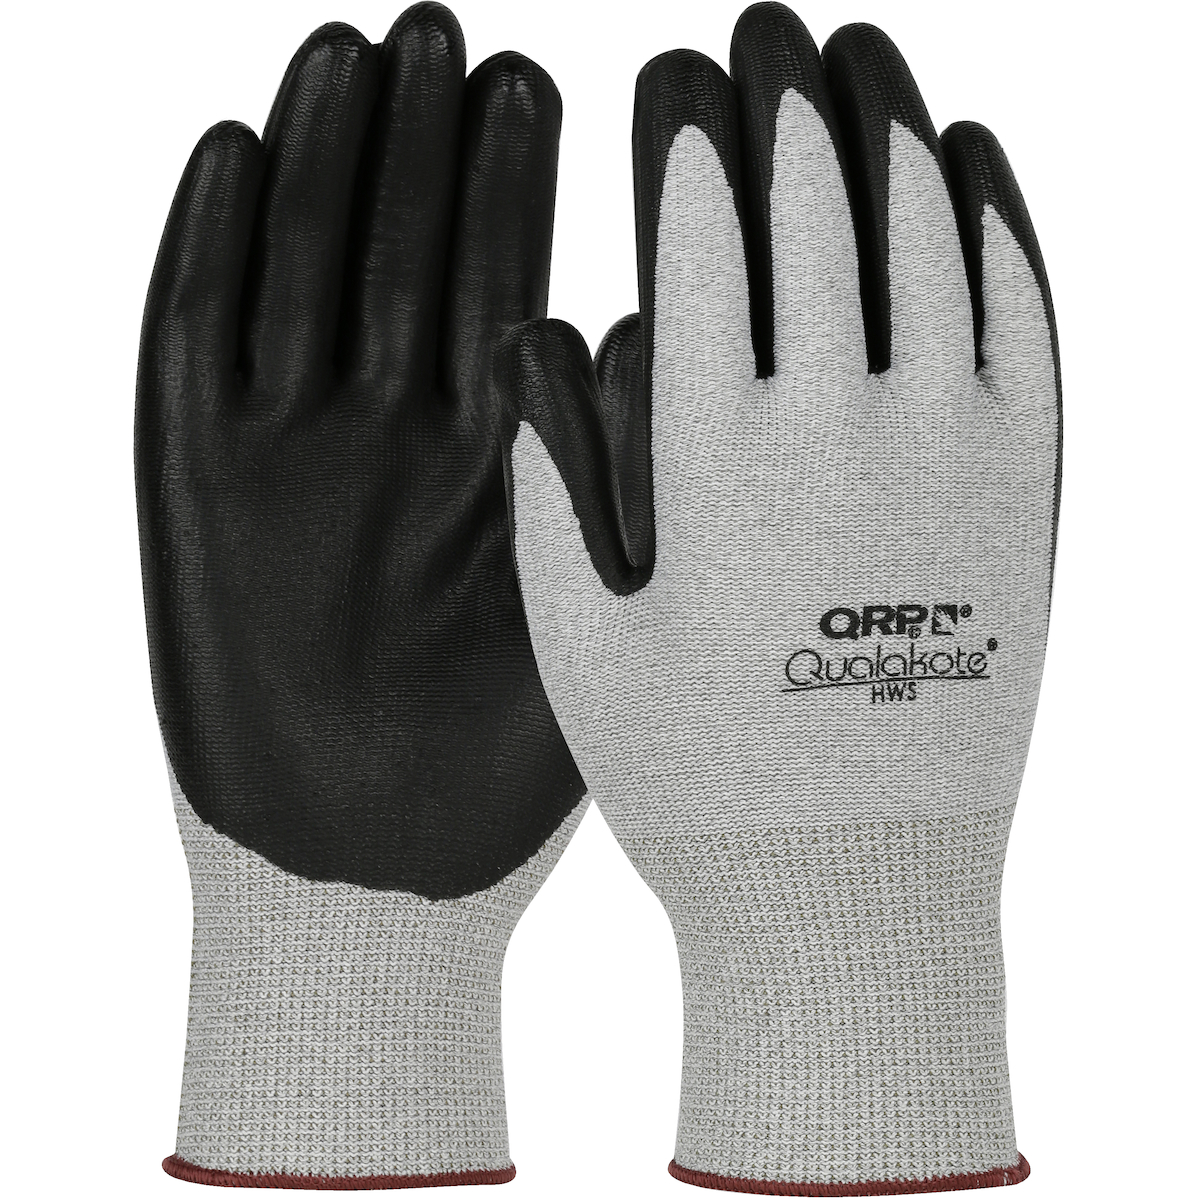 #HWS PIP QRP® Qualakote® Seamless Knit Nylon/Carbon Fiber Gloves with Nitrile Foam Grip